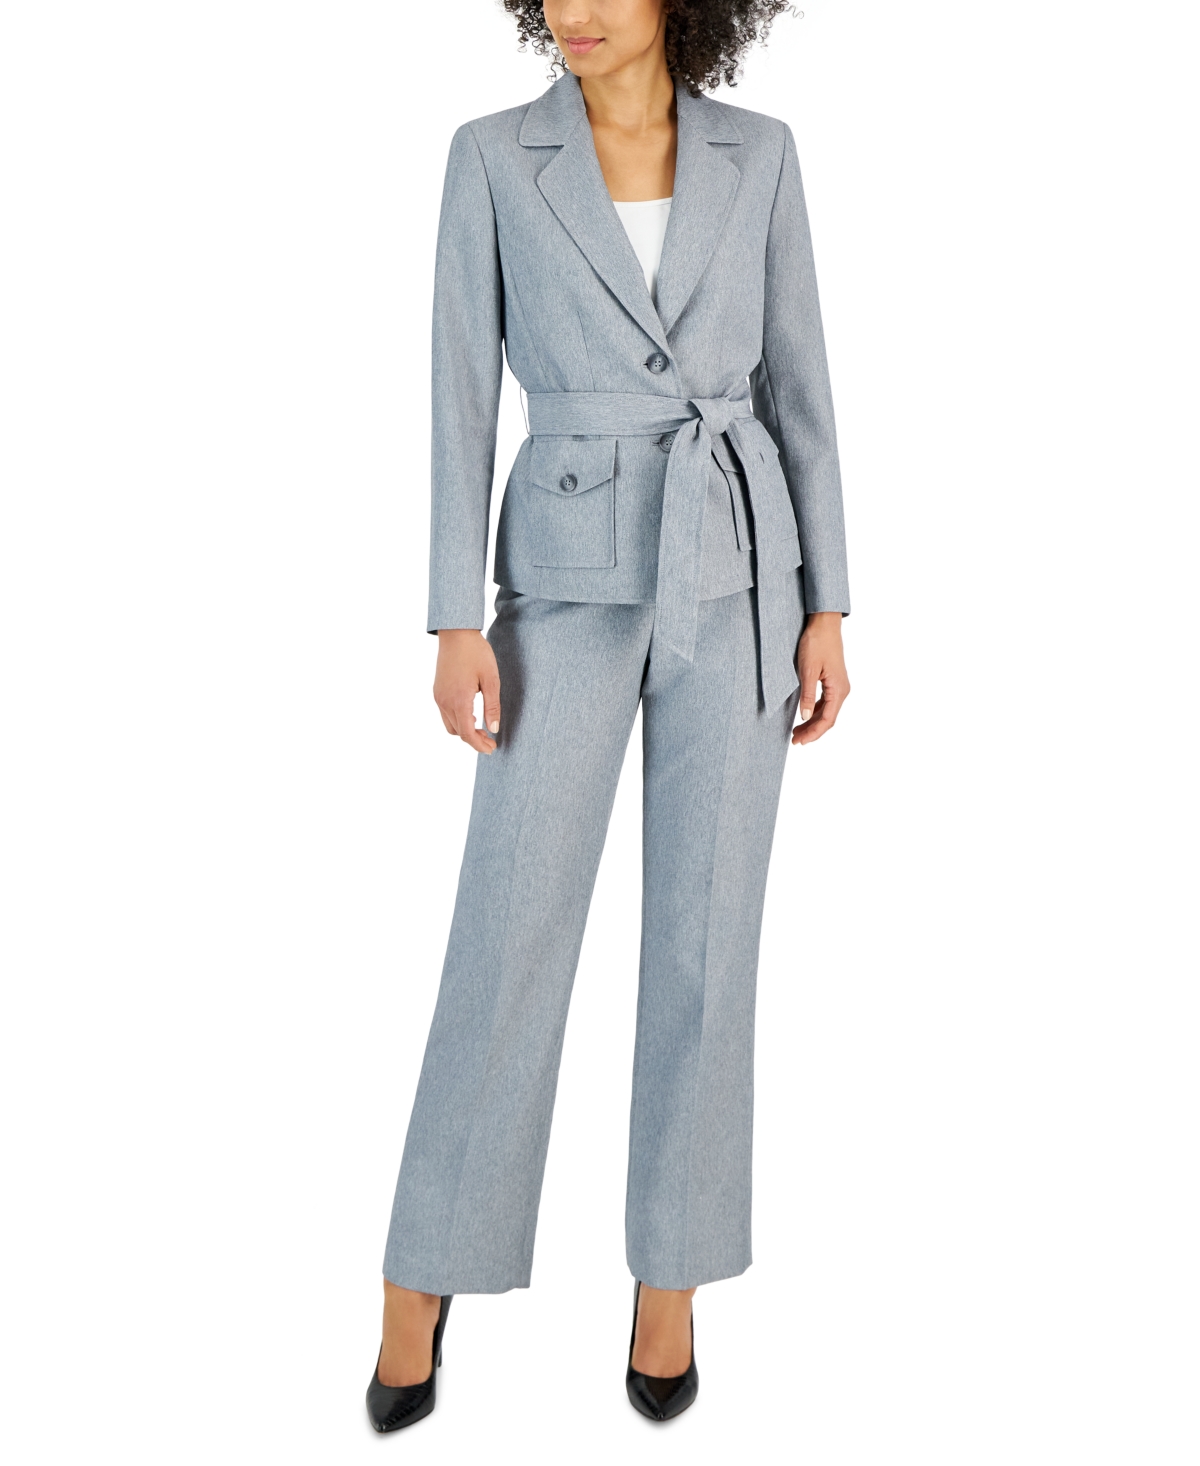 Women's Belted Safari Jacket and Kate Pants, Regular & Petite Sizes - Light Grey Multi